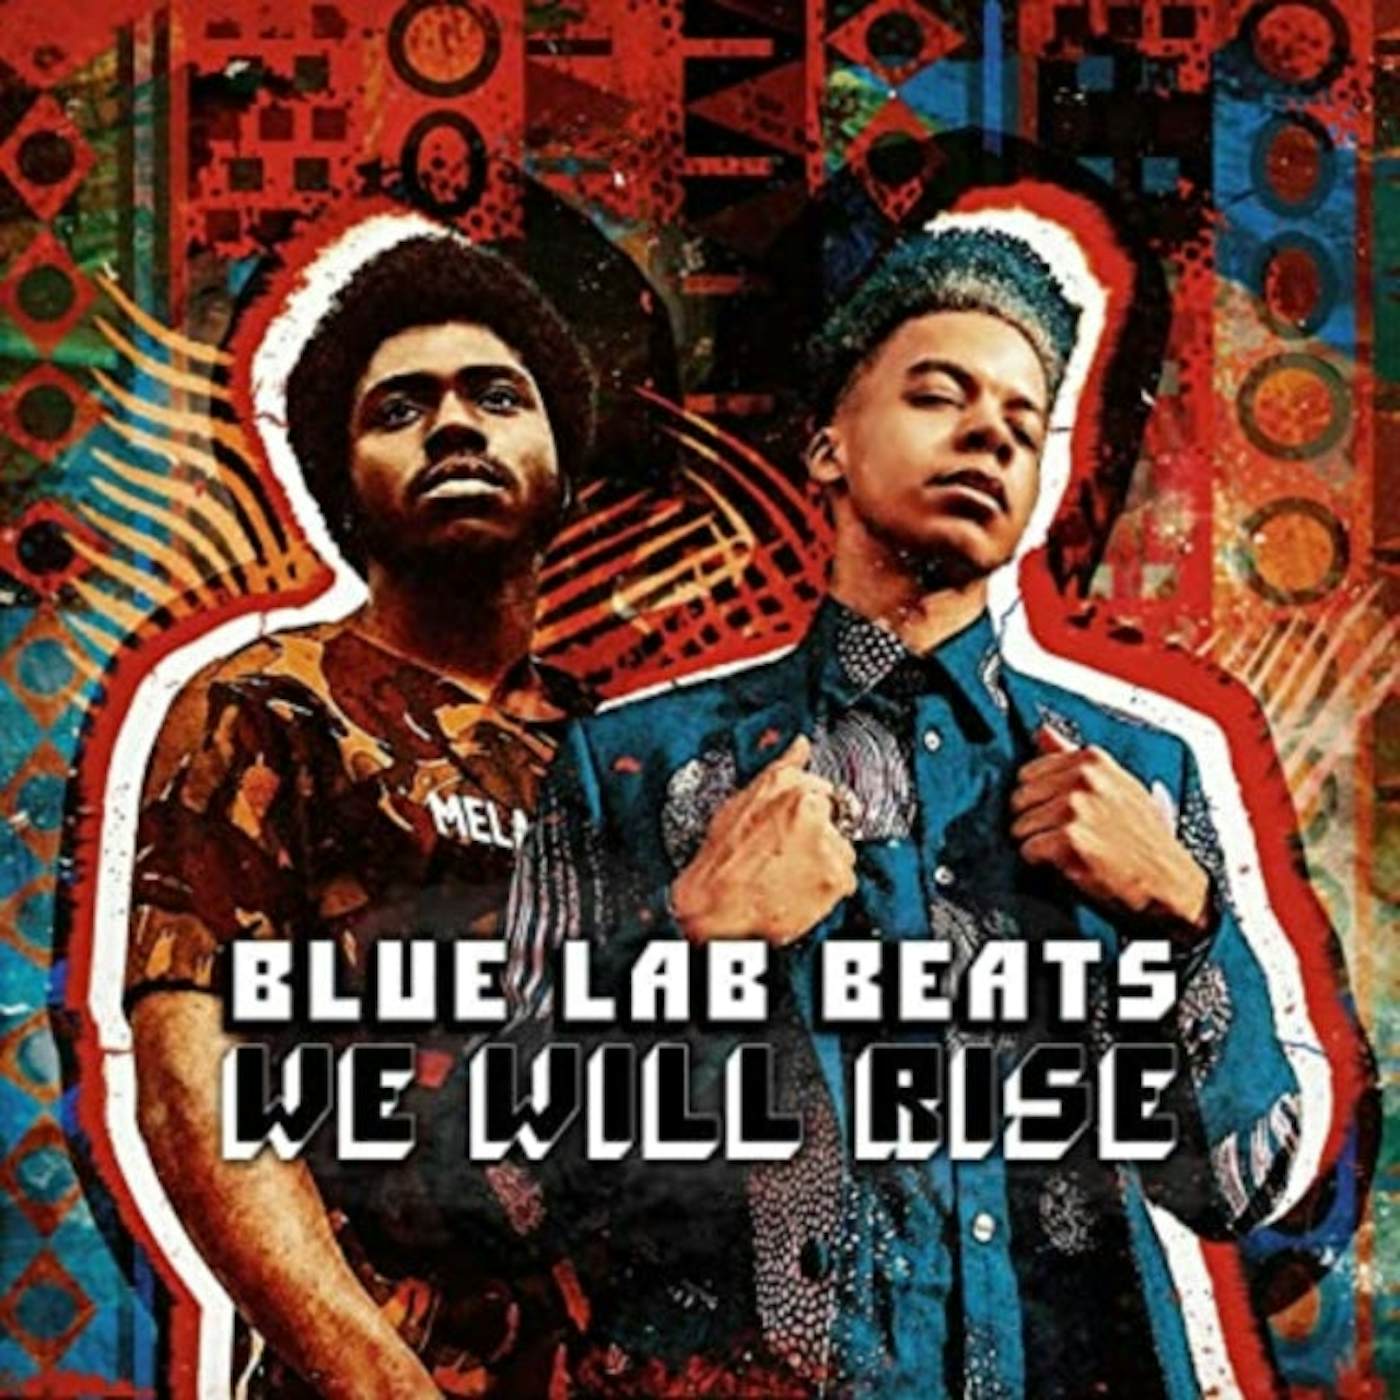 Blue Lab Beats LP Vinyl Record - We Will Rise